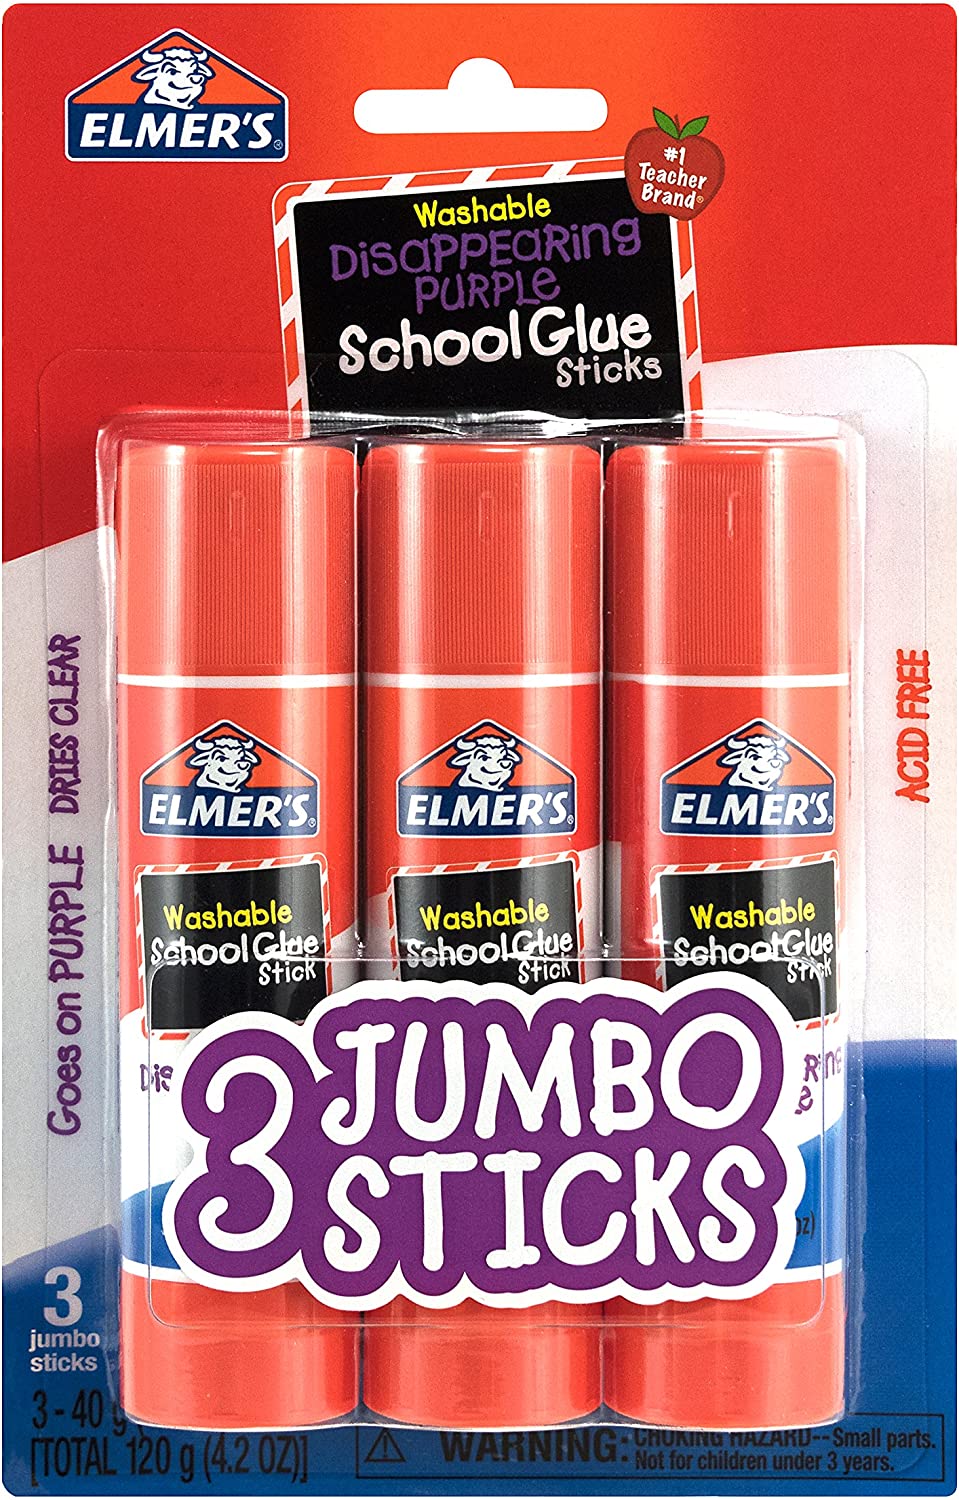 Elmer's Large School Glue Stick, Post-its, Glue & Tape